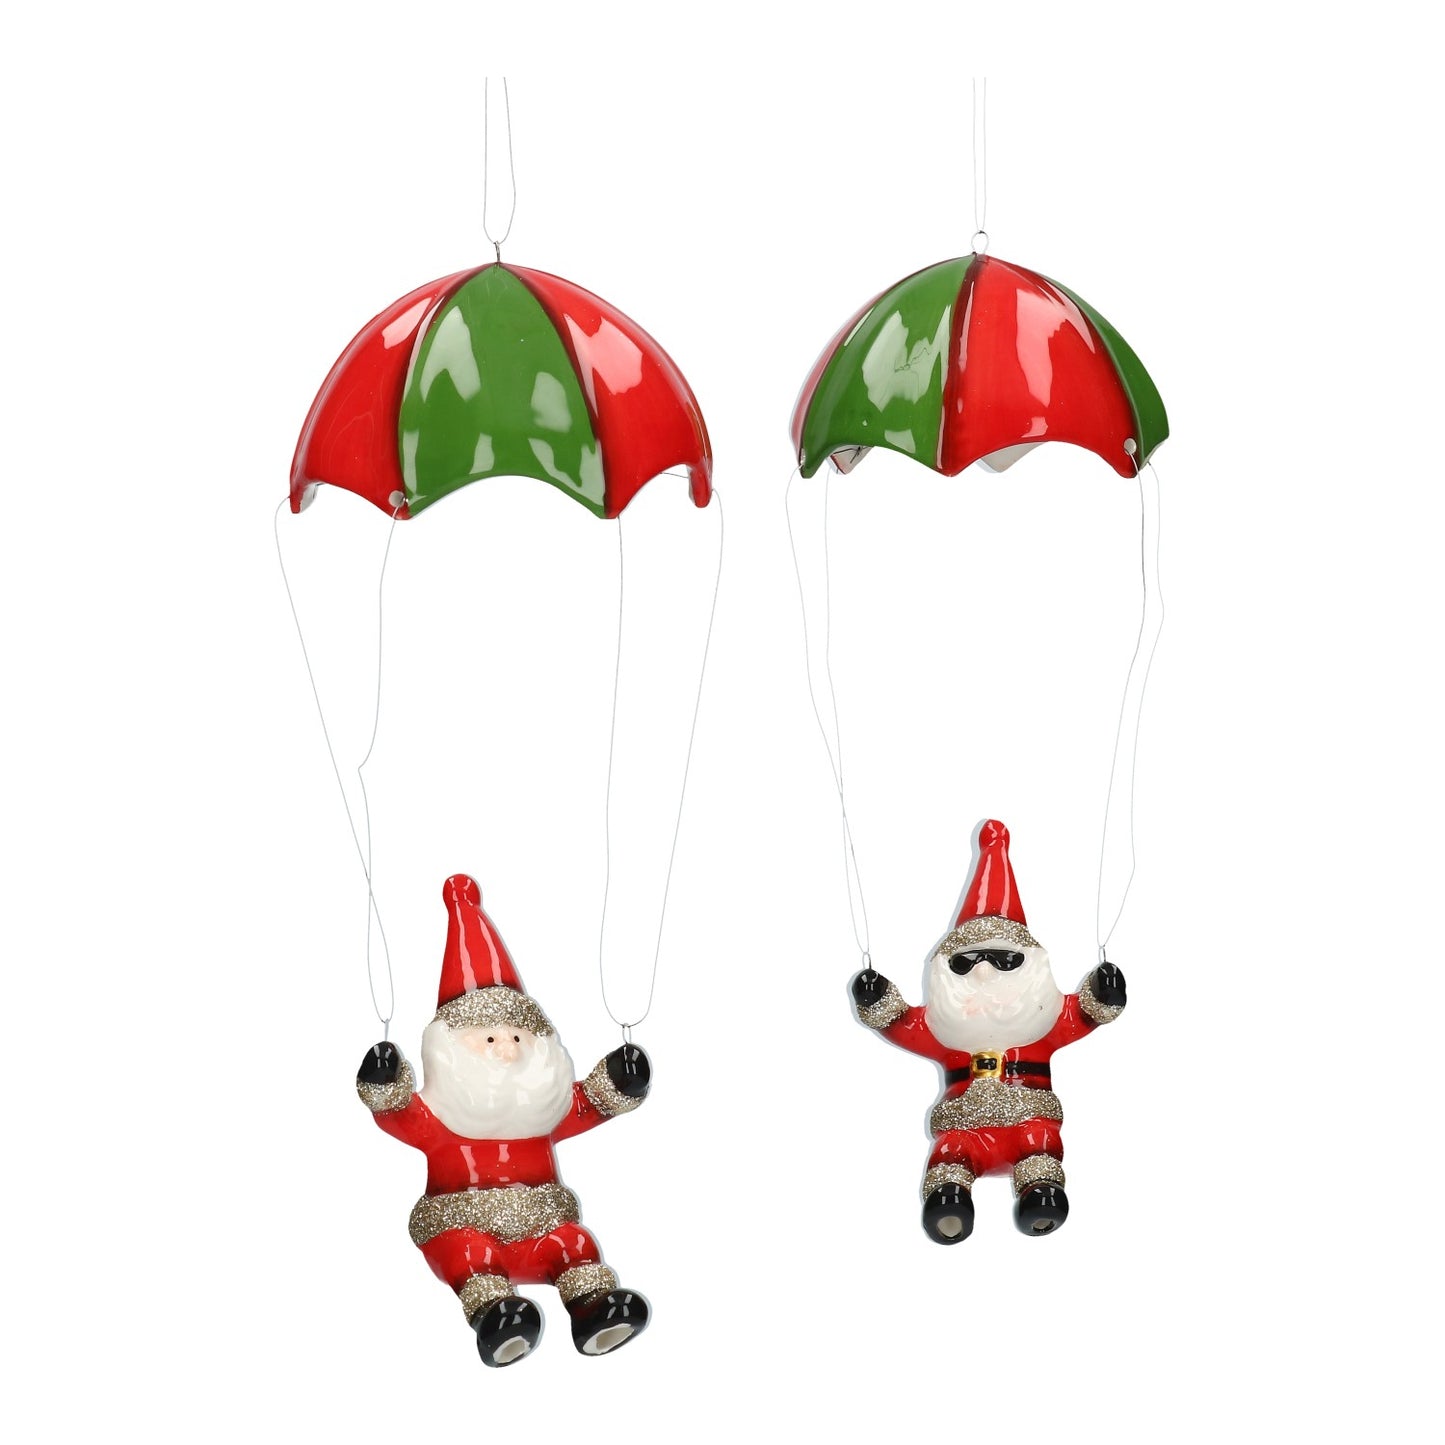 Hänger Weihnachtsmann am Fallschirm Keramik 2 Modelle